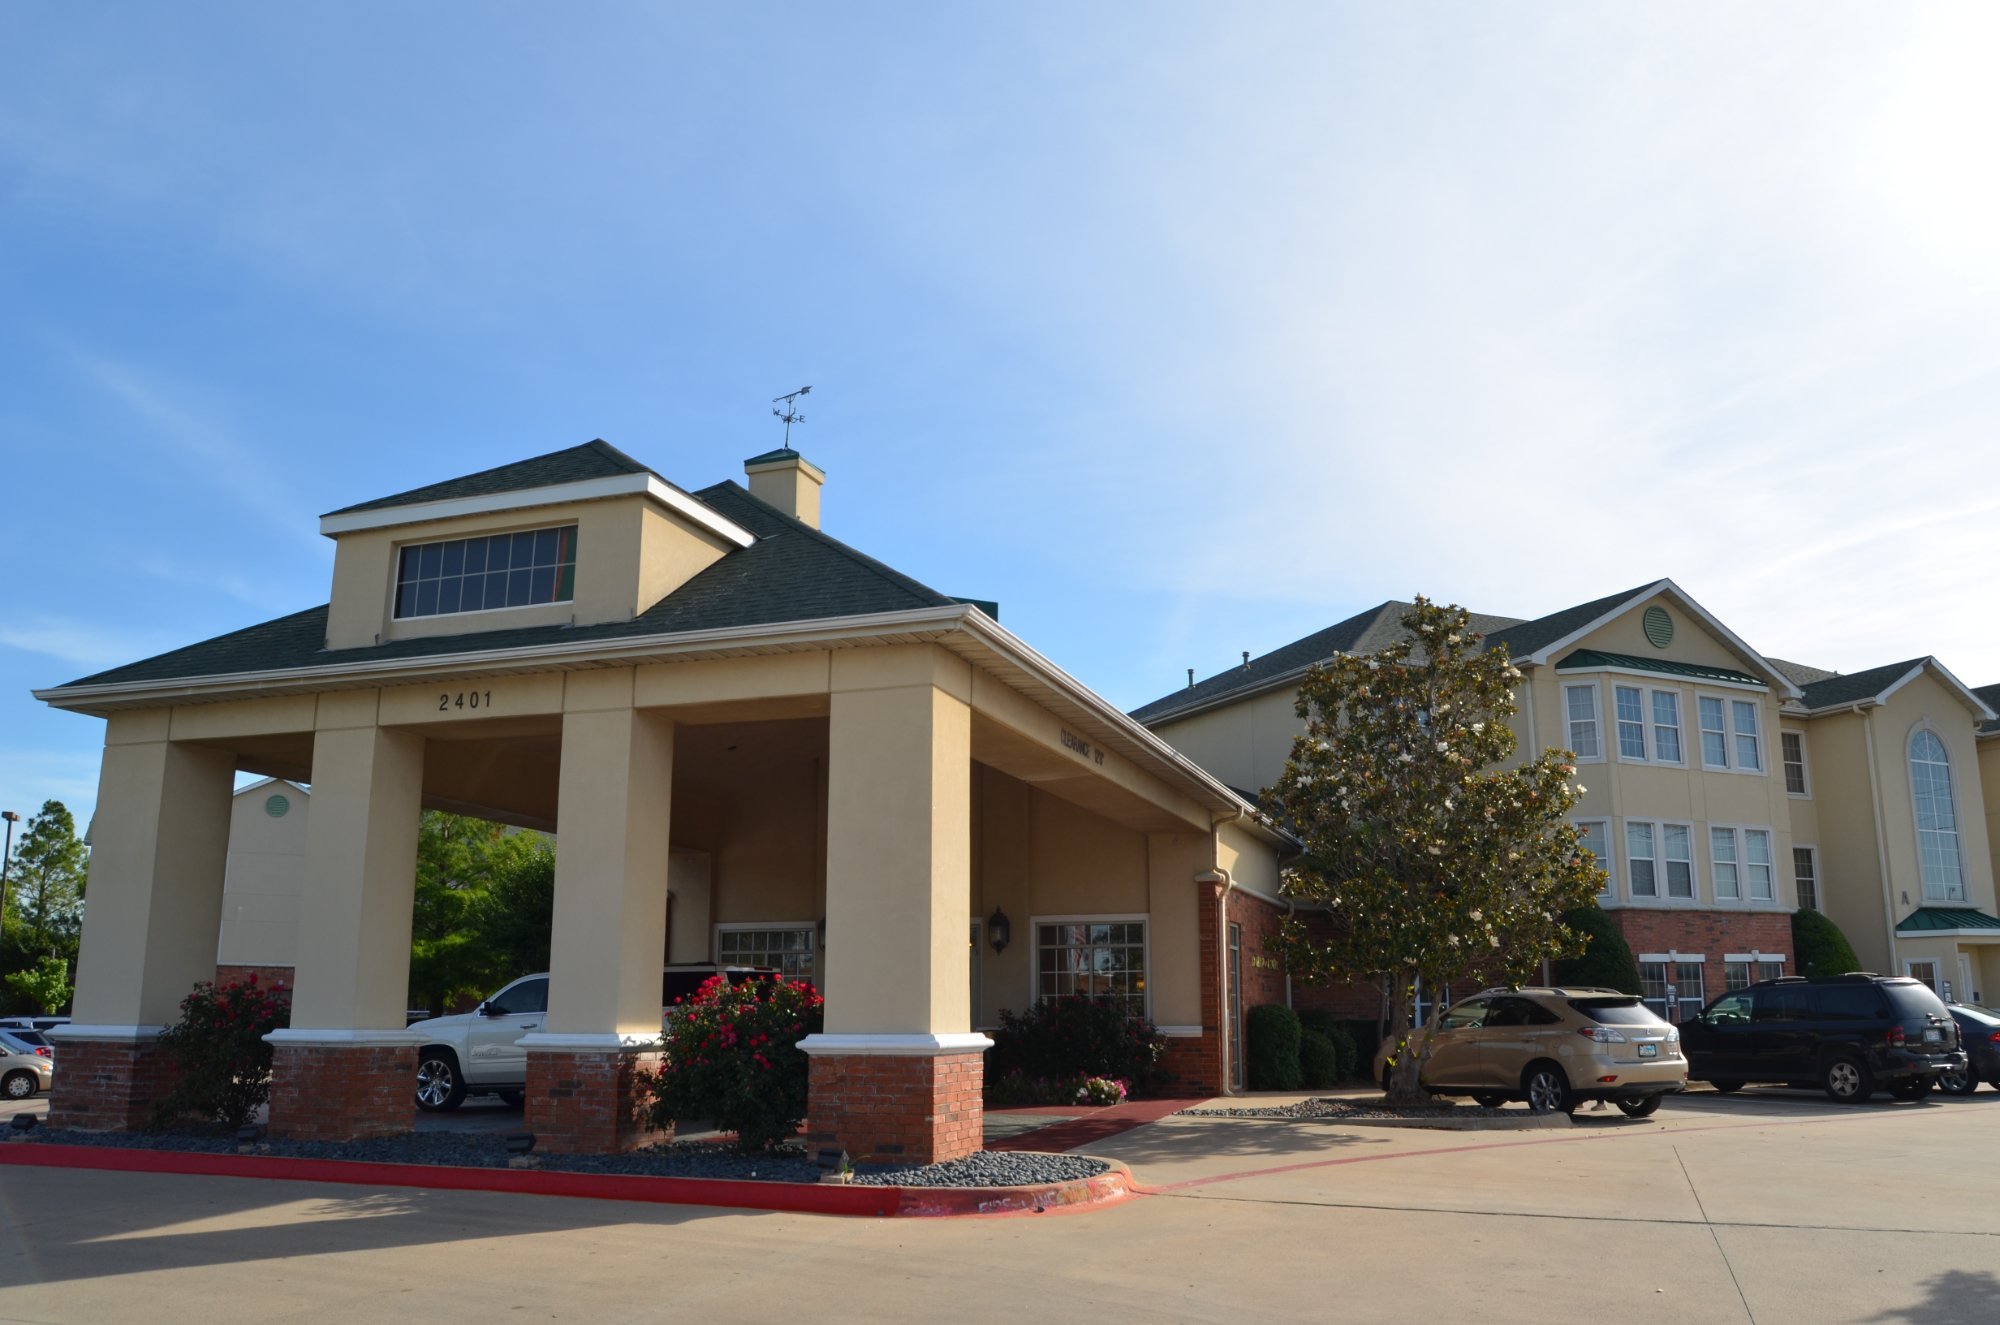 Photo of Homewood Suites DFW Bedford, Bedford, TX